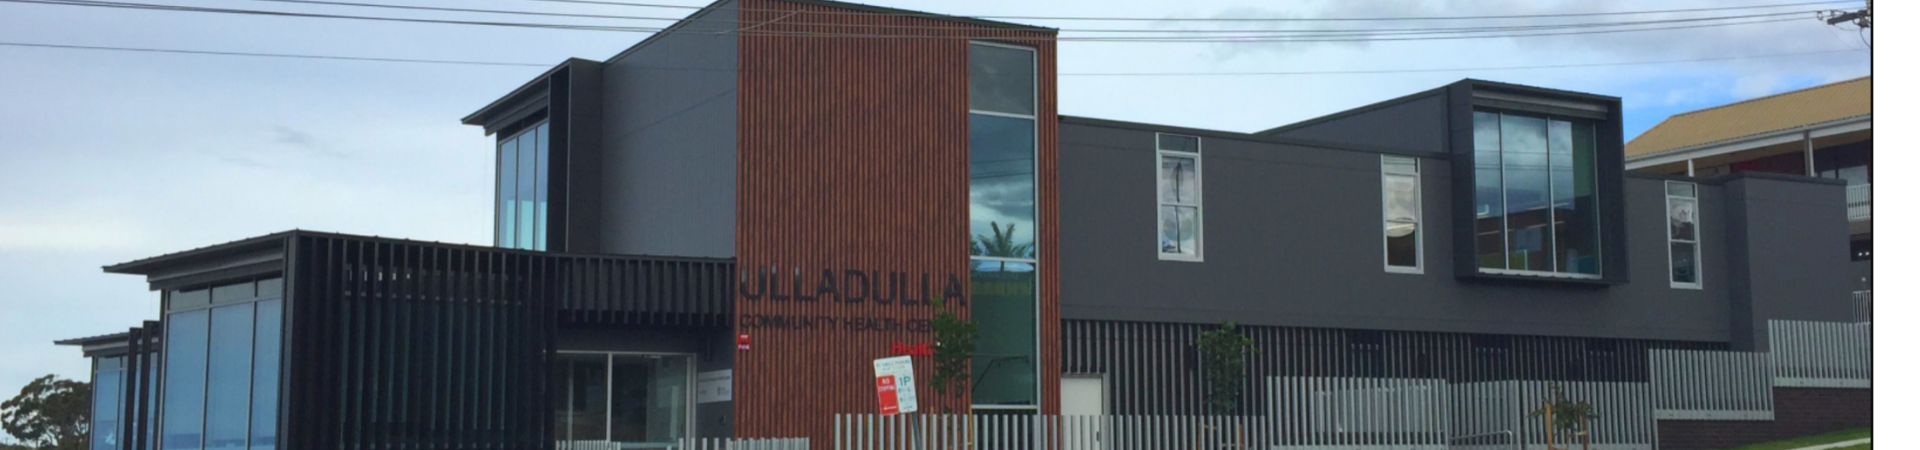 Ulladulla HealthOne facade